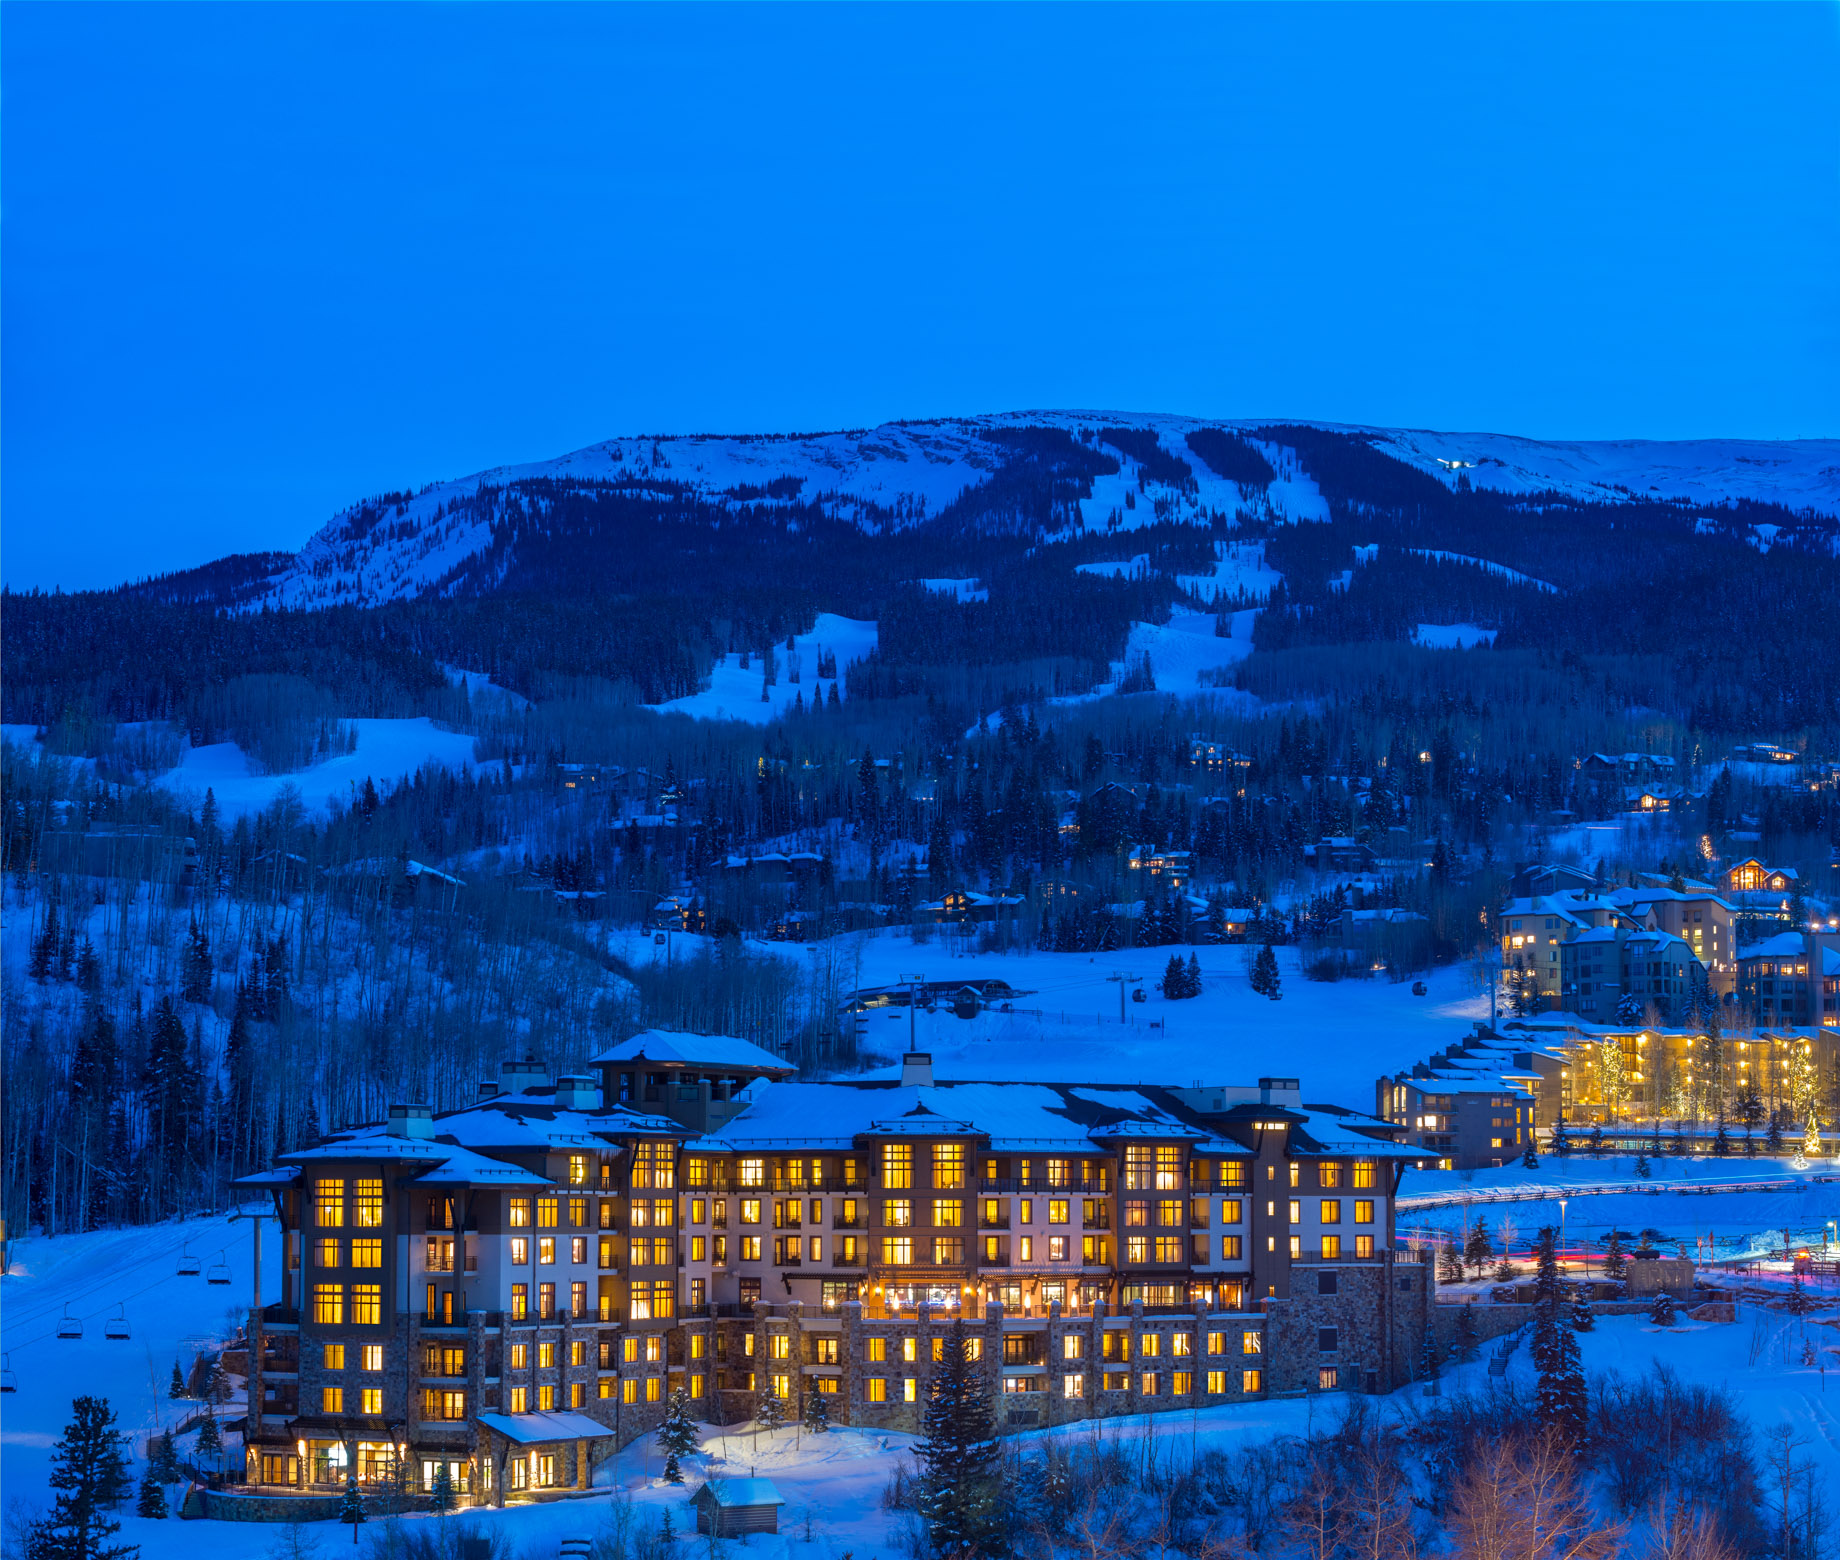 Viceroy Snowmass Luxury Resort – Aspen Snowmass Village, CO, USA – Hotel Winter Night View